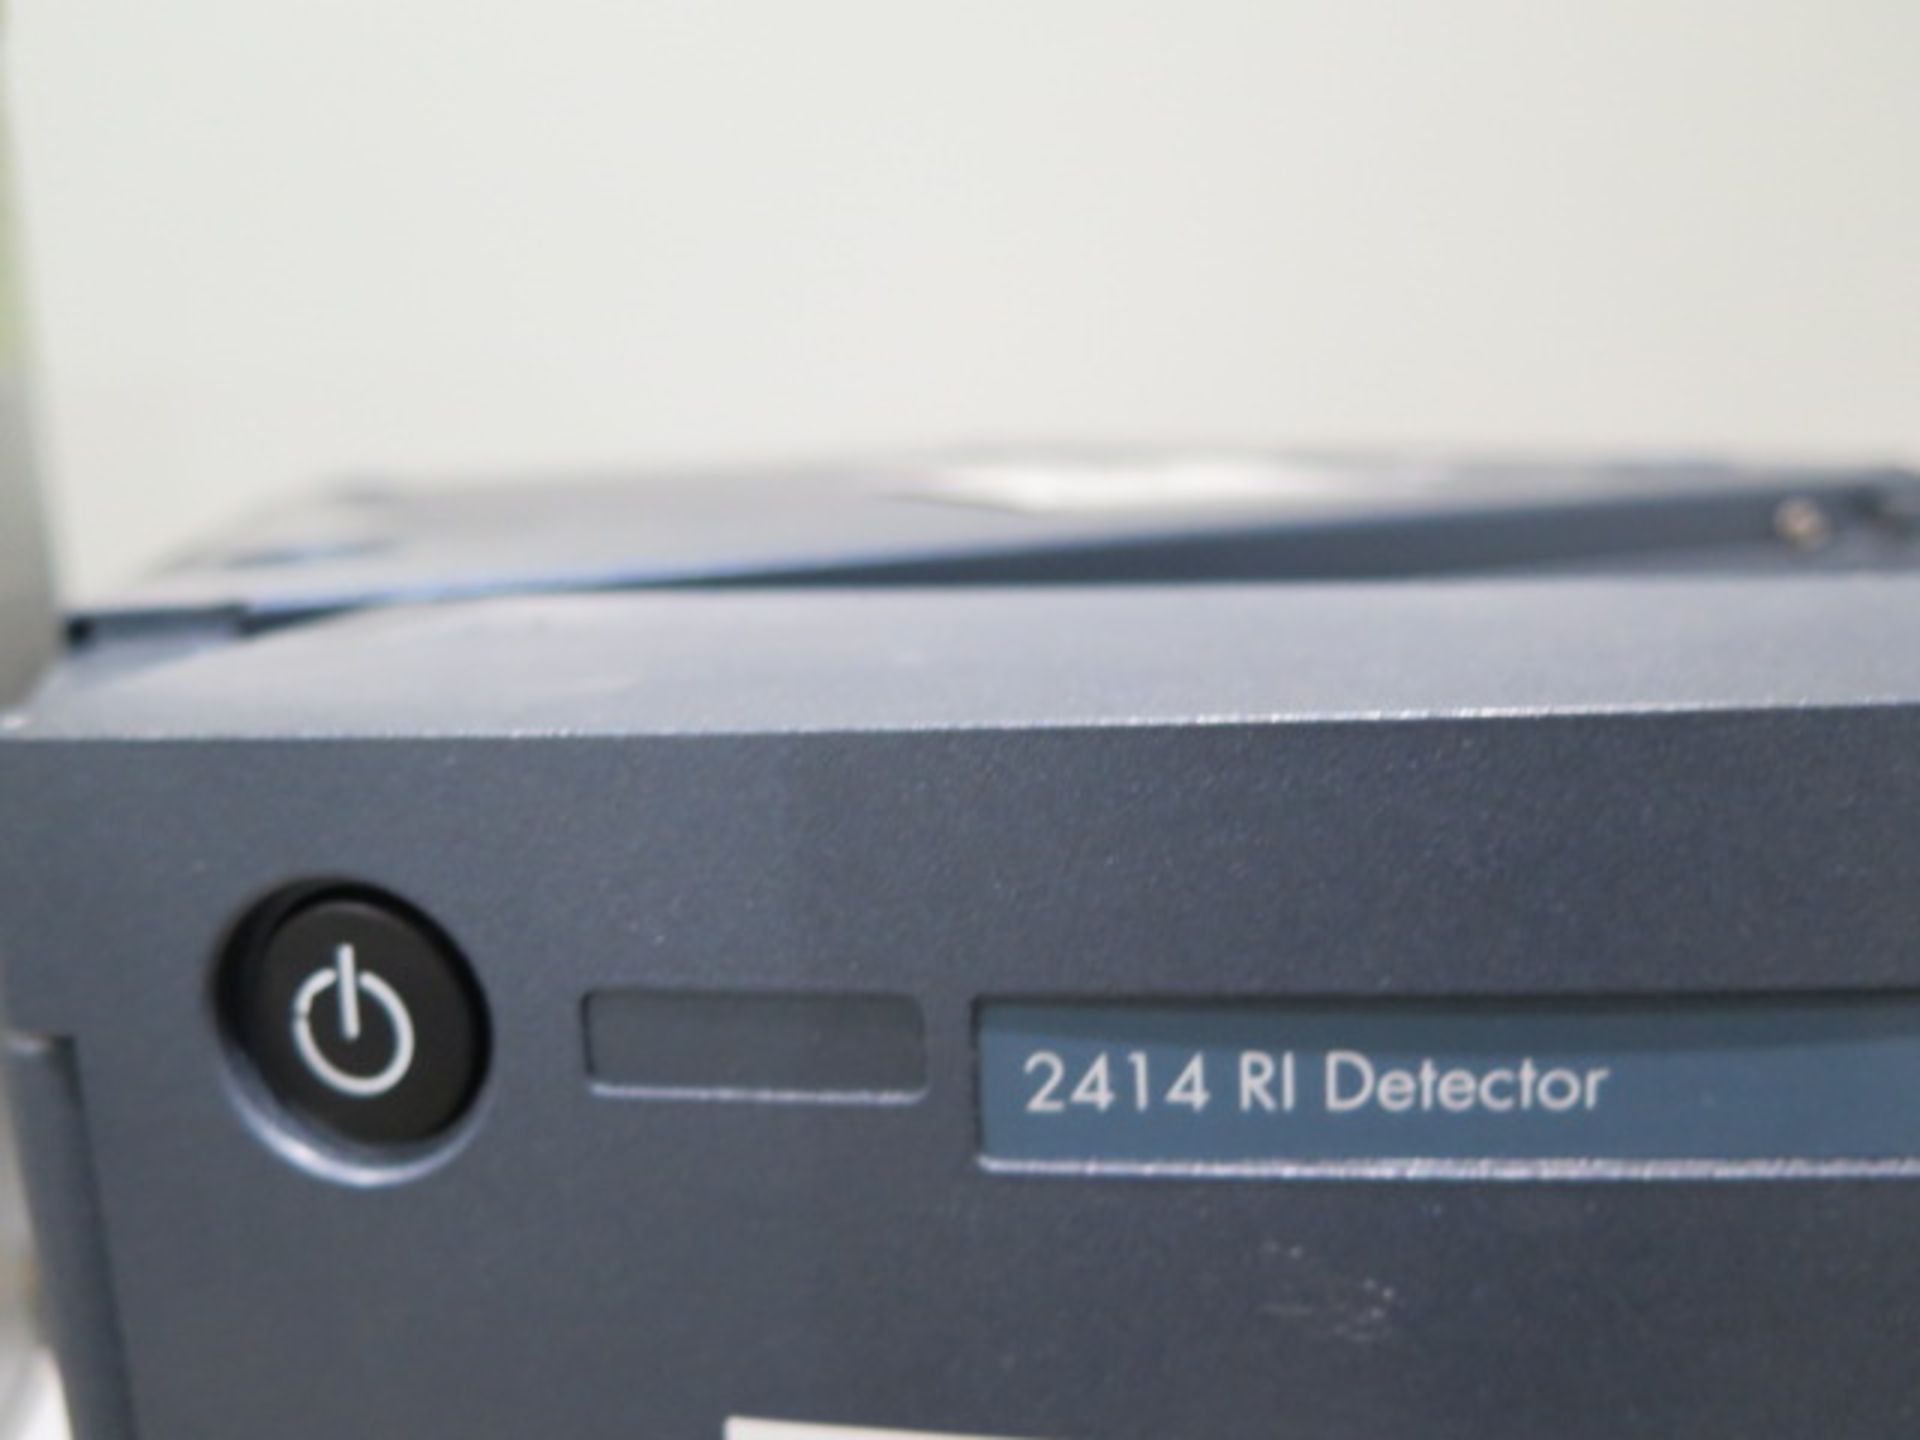 Waters 2414 RI Detector (Refractive Index Detector) (SOLD AS-IS - NO WARRANTY) - Image 5 of 5